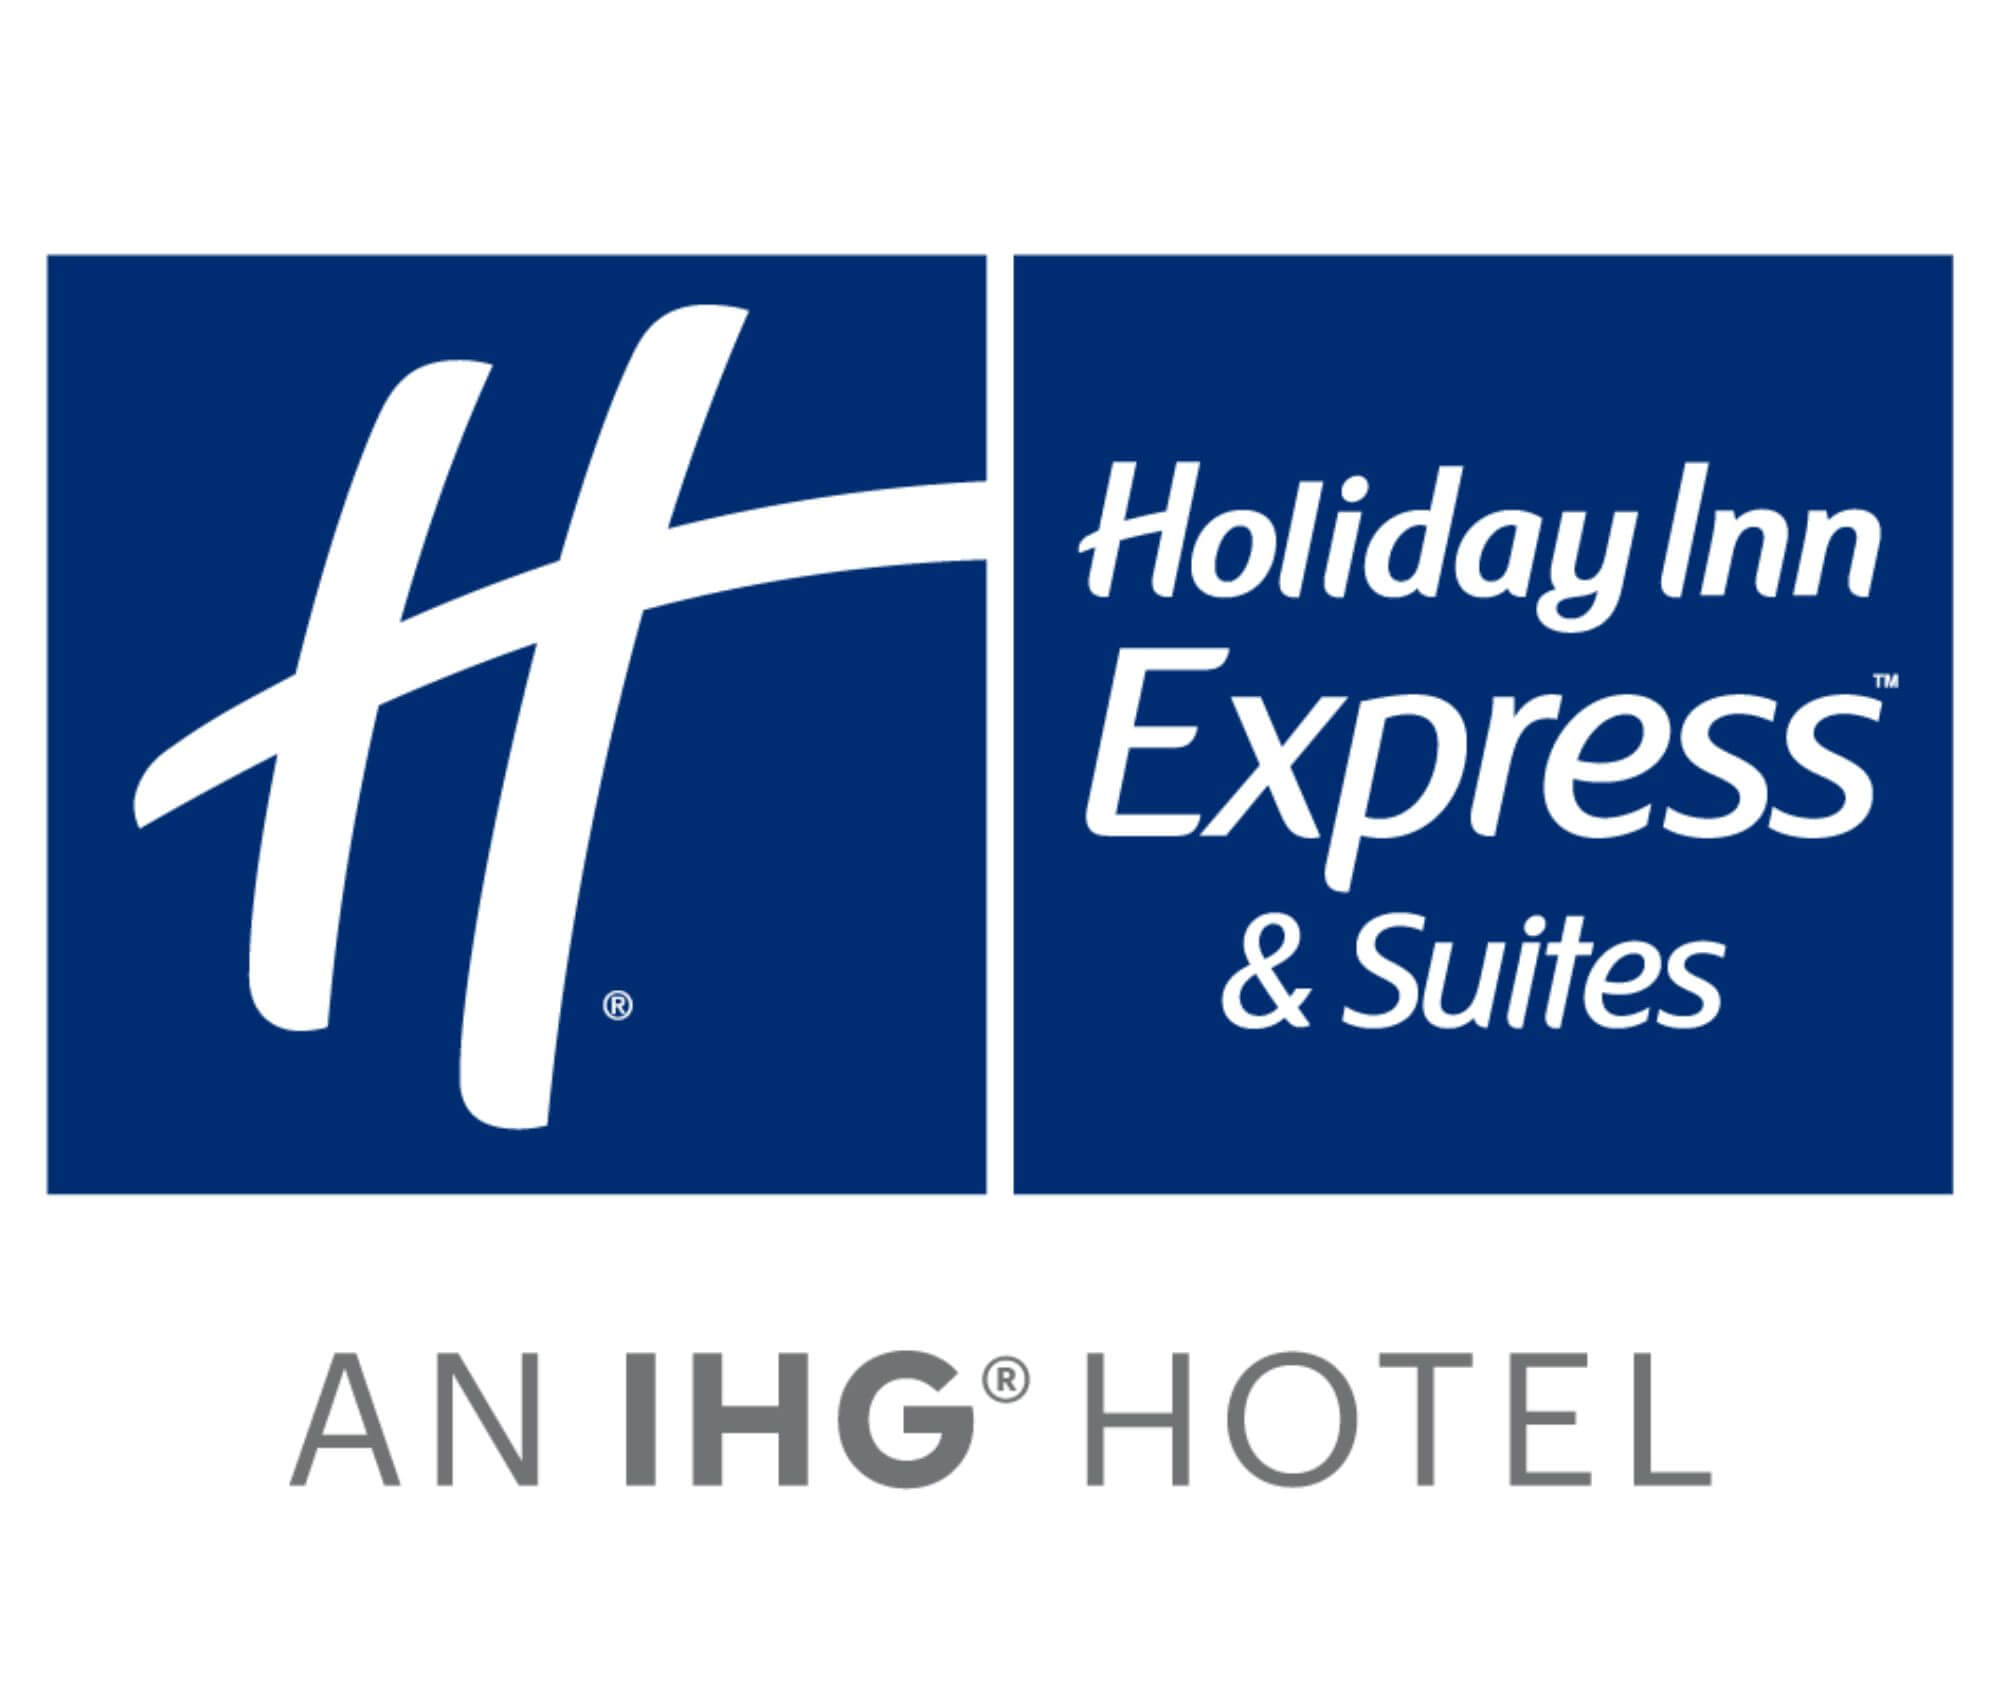 Holiday Inn Express &amp; Suites Logo